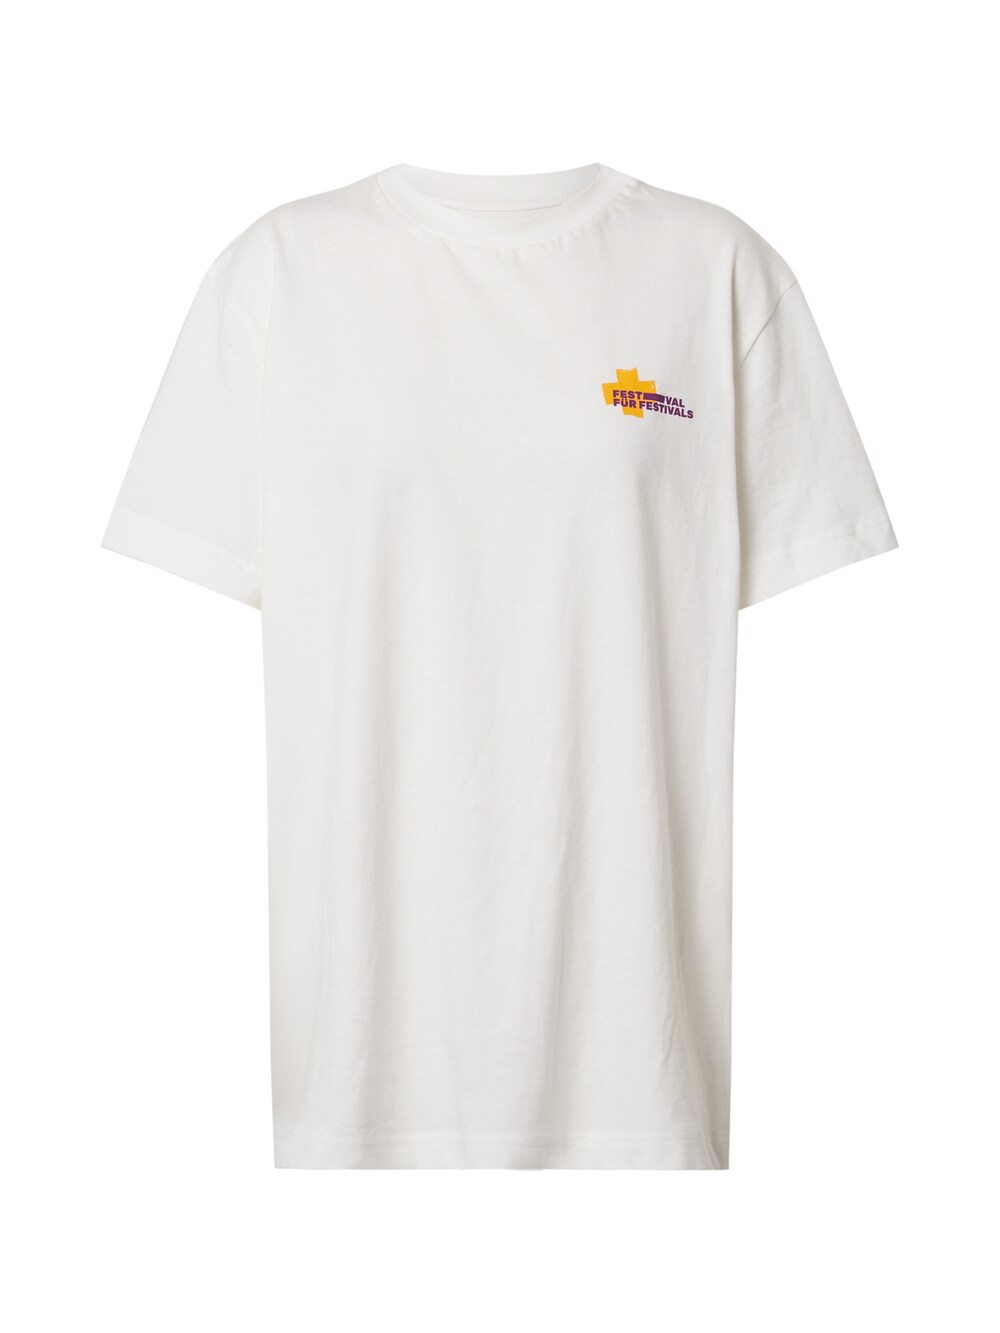 

Рубашка стандартного кроя ABOUT EVERYONE Festival Für Festivals, белый